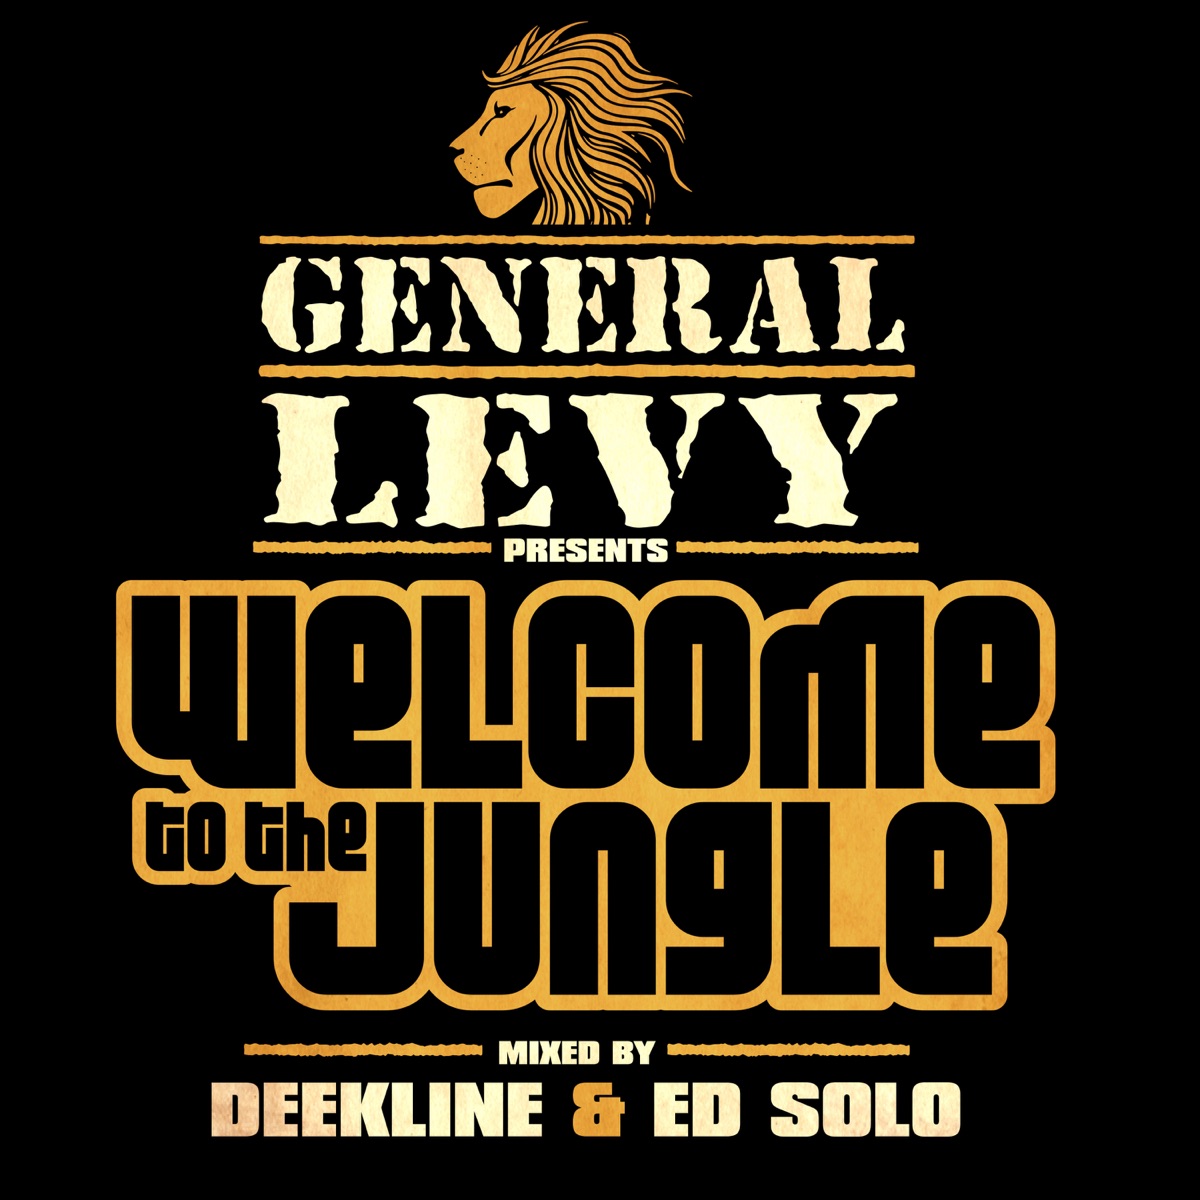 General Levy, Deekline & Ed Solo presents Welcome to the Jungle par Various  Artists sur Apple Music